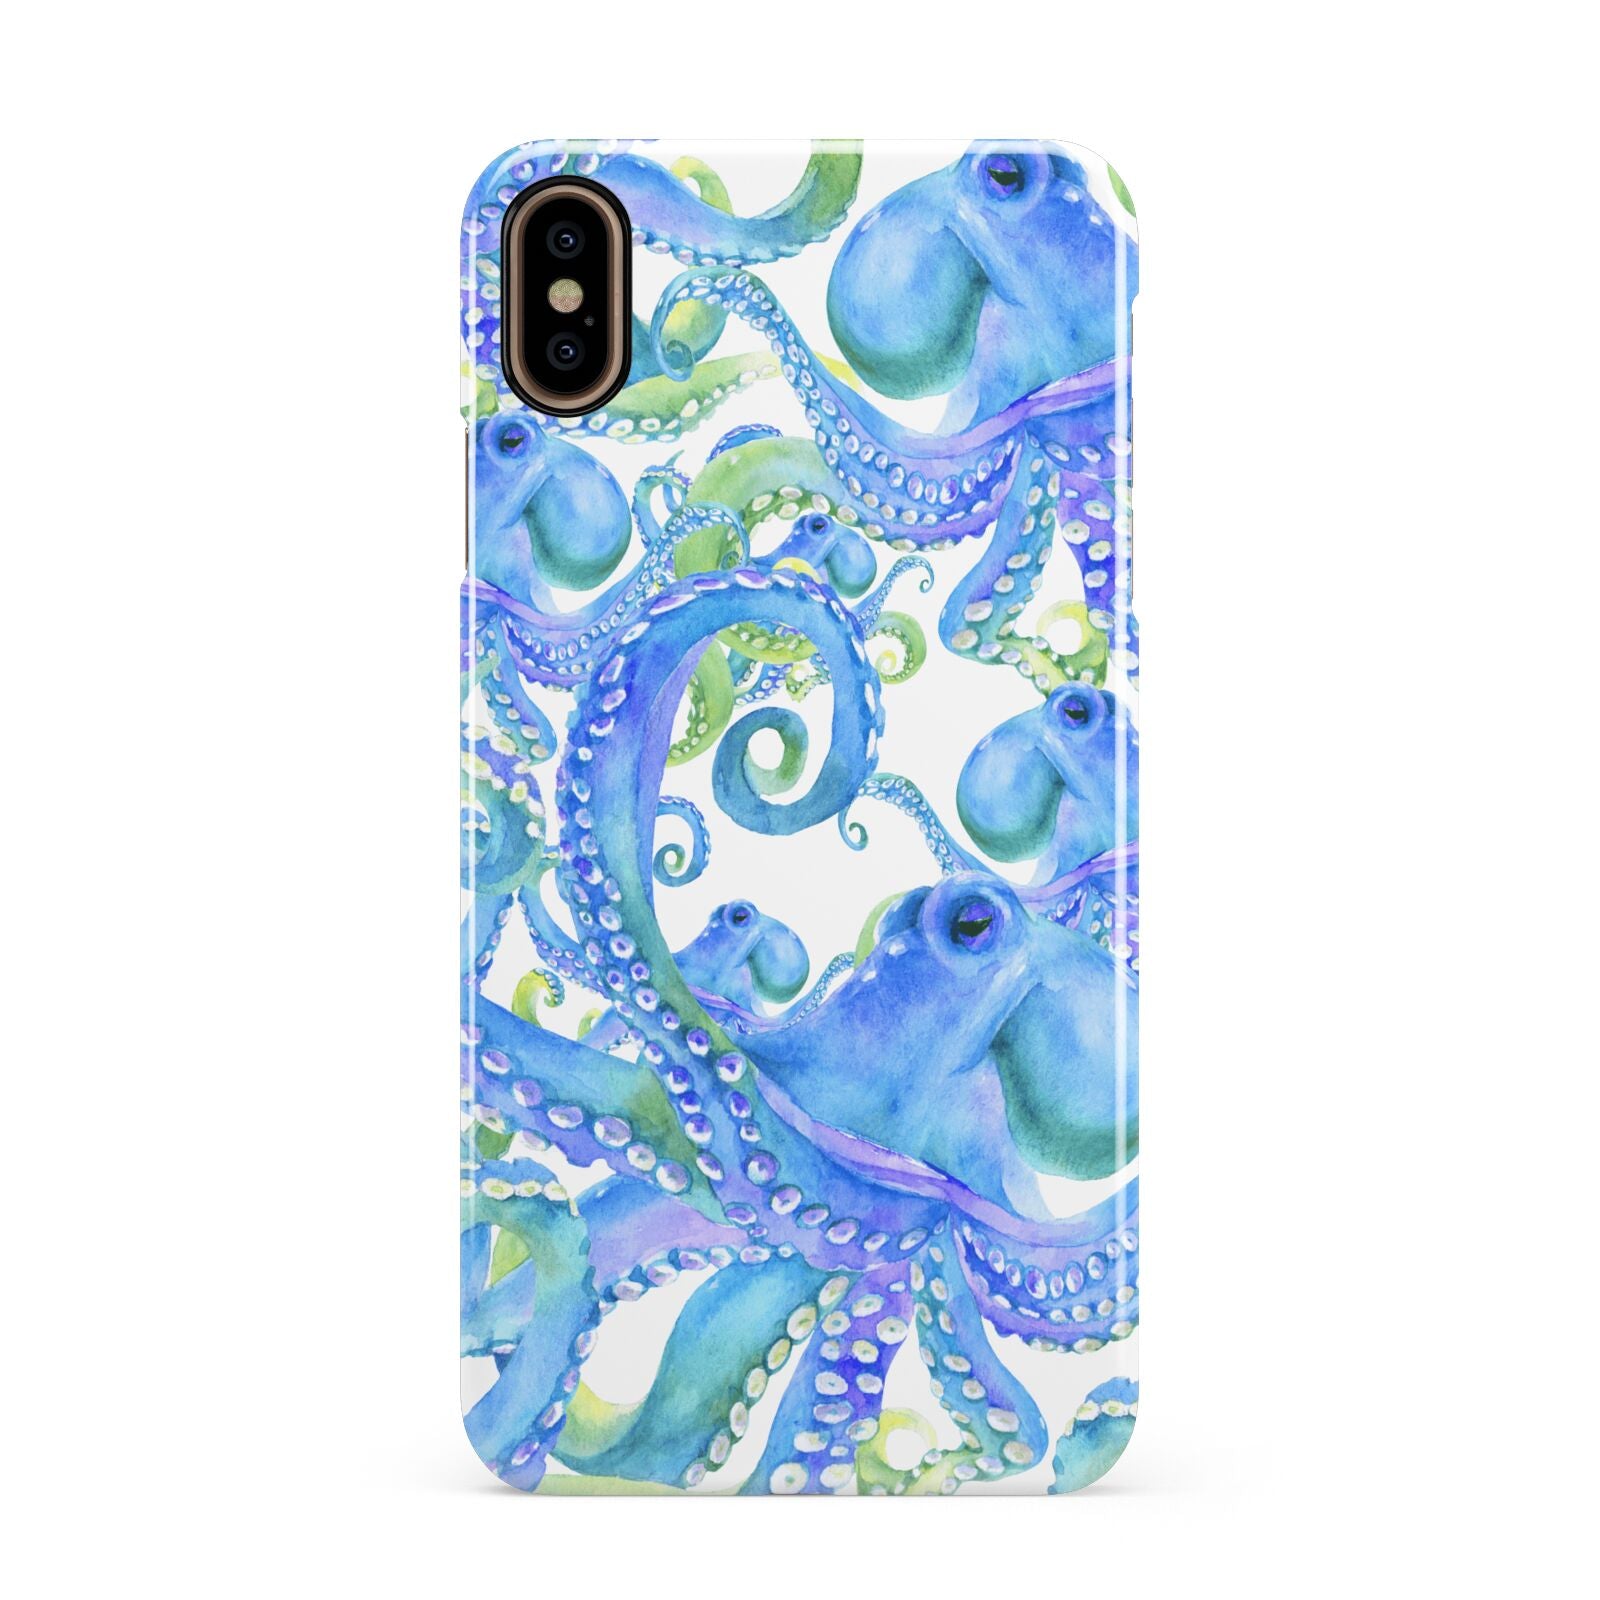 Octopus Apple iPhone Xs Max 3D Snap Case